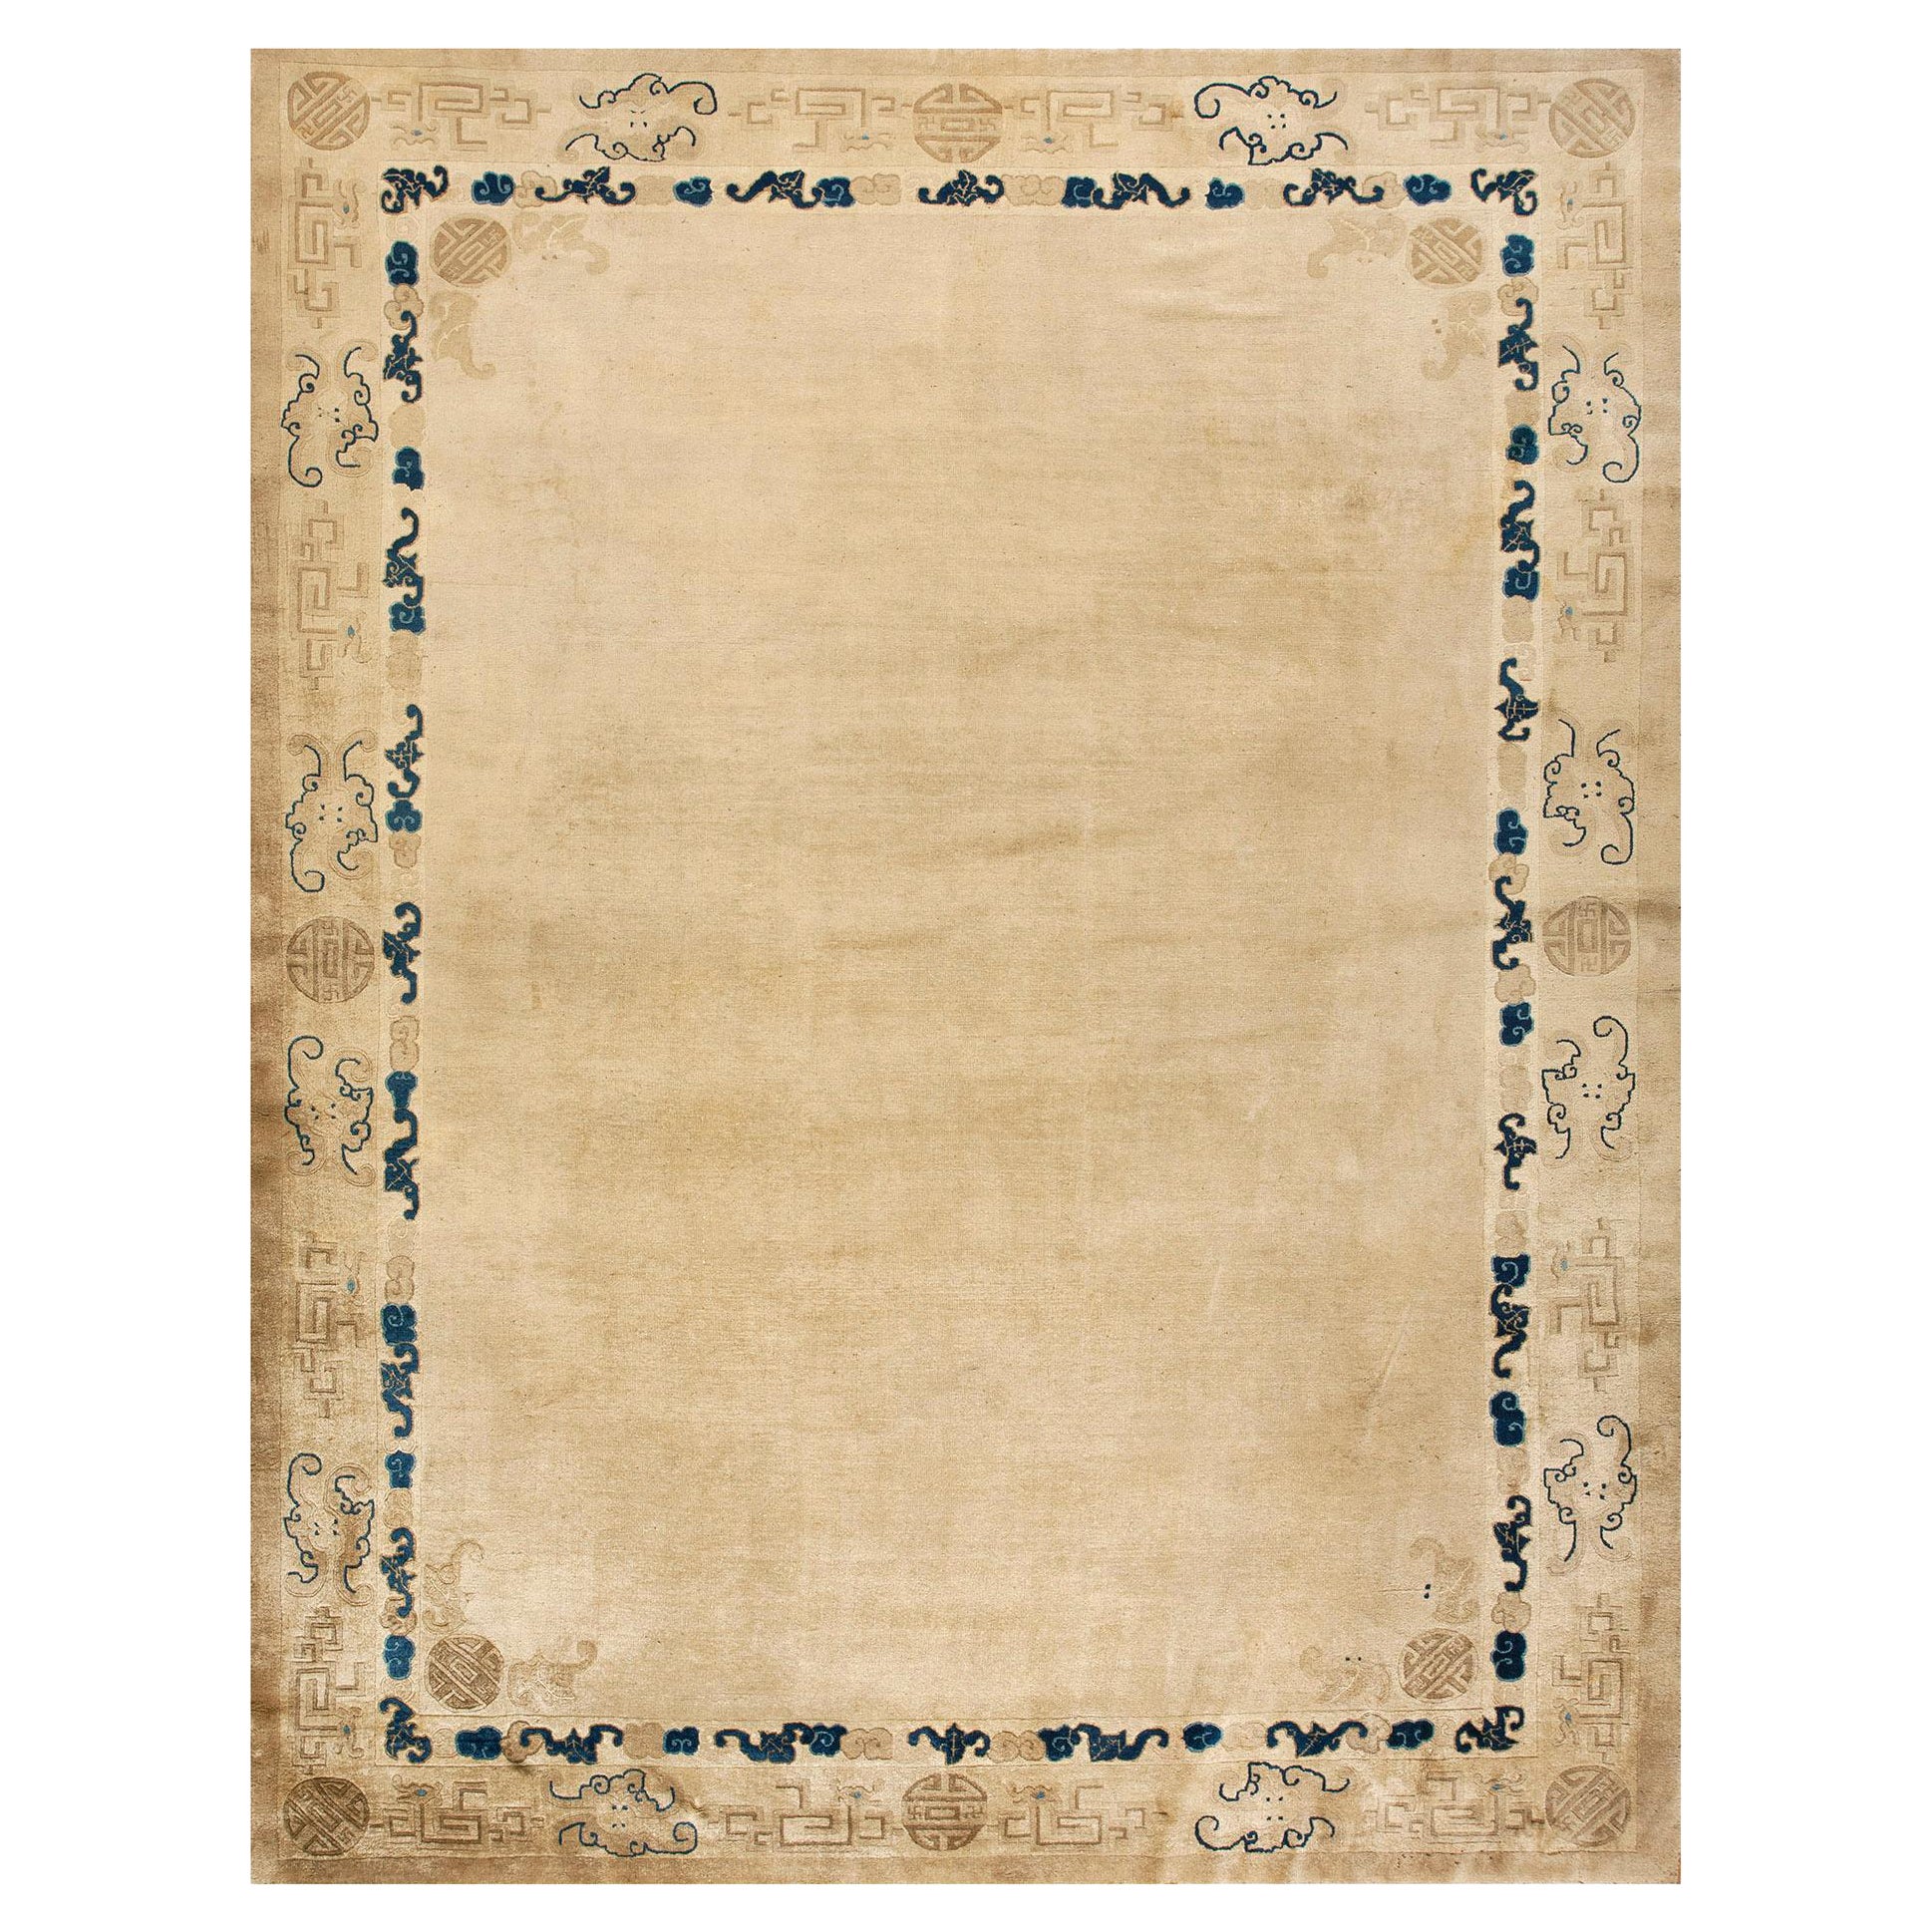 !9th Century Chinese Peking Carpet ( 9'4" x 11'8" - 285 - 355 )